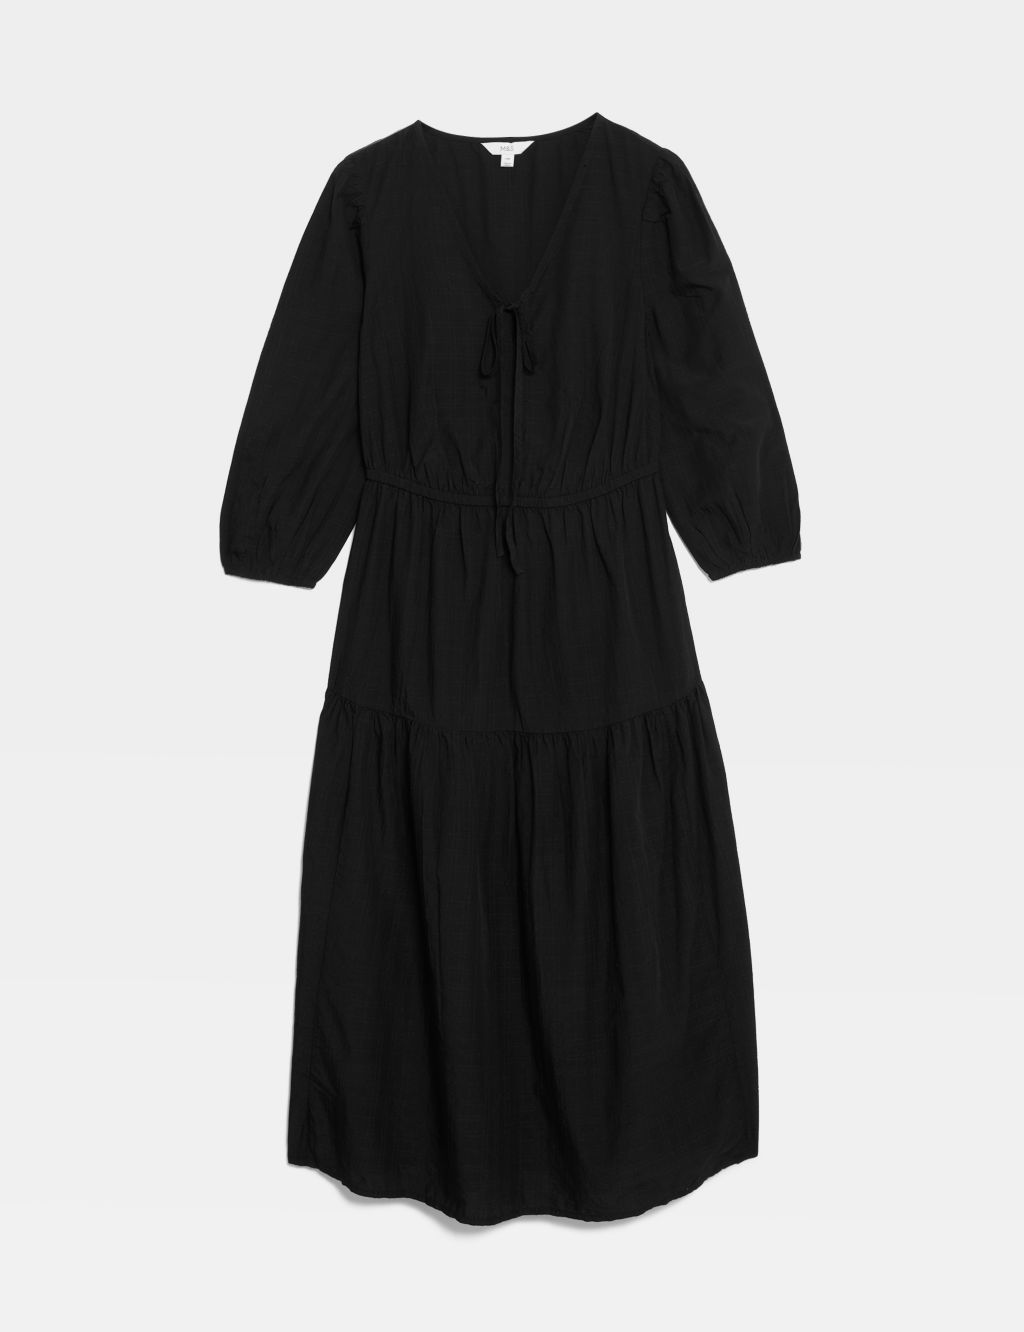 Textured Tie Neck Tiered Midi Dress | M&S Collection | M&S